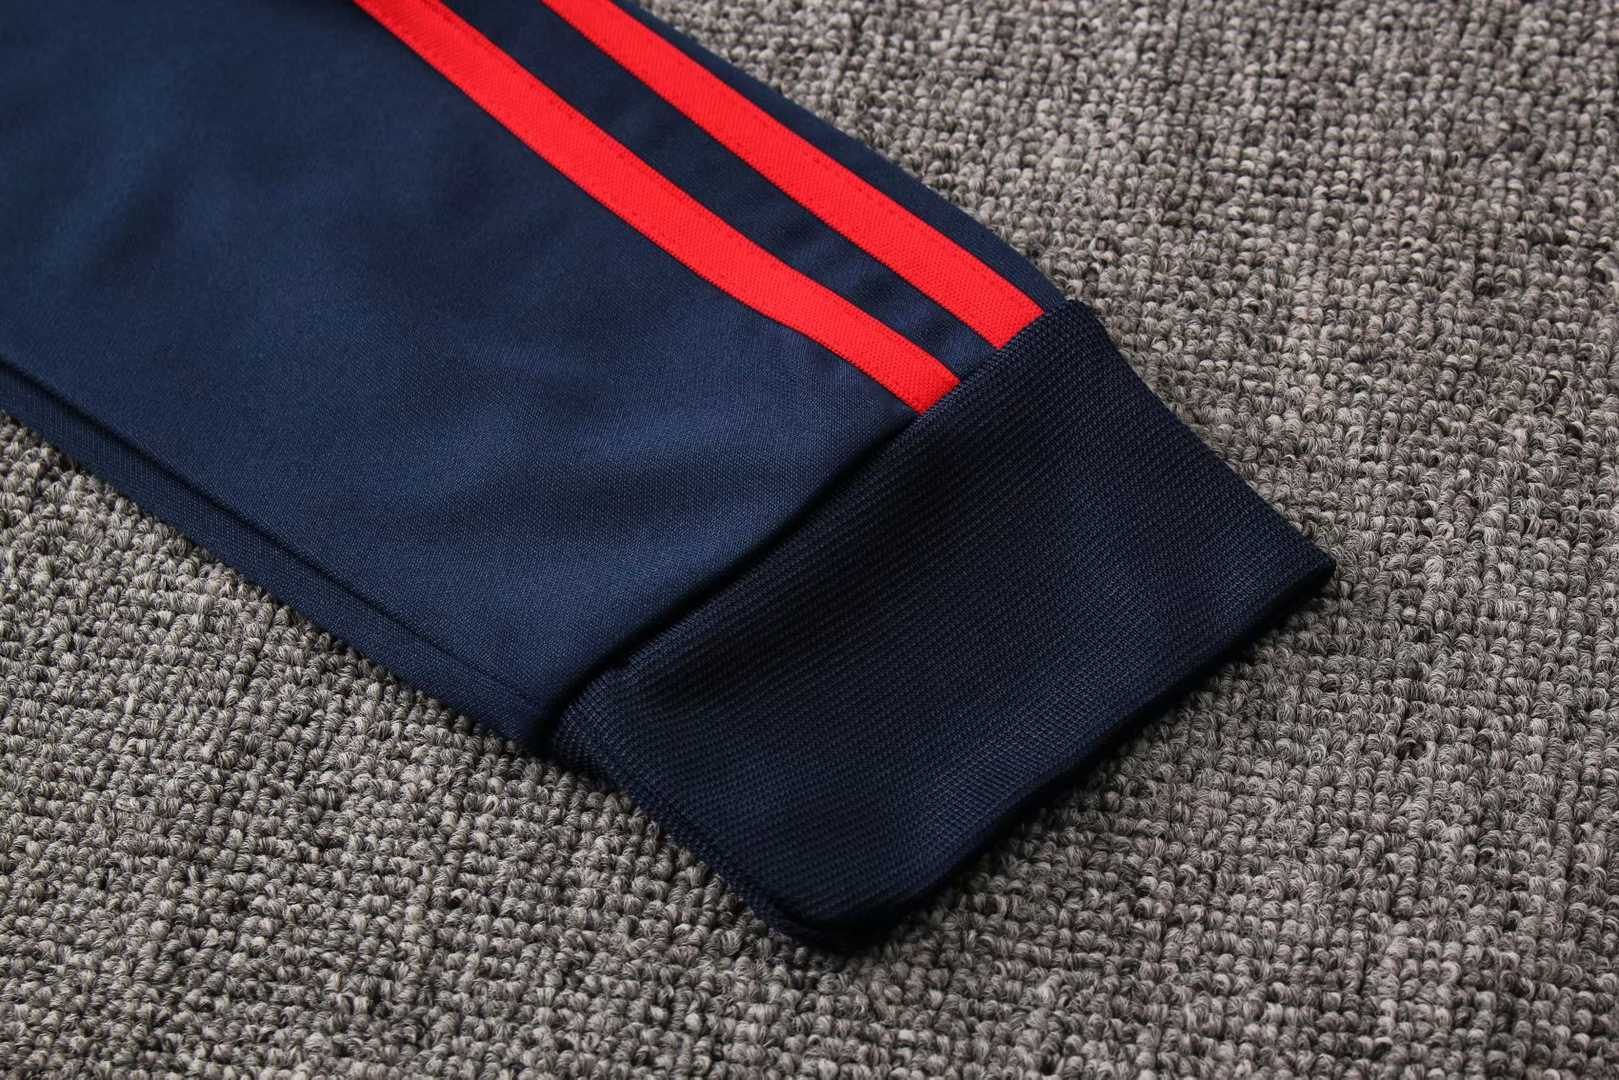 2019/20 Arsenal Navy Mens Soccer Training Suit(Jacket + Pants)